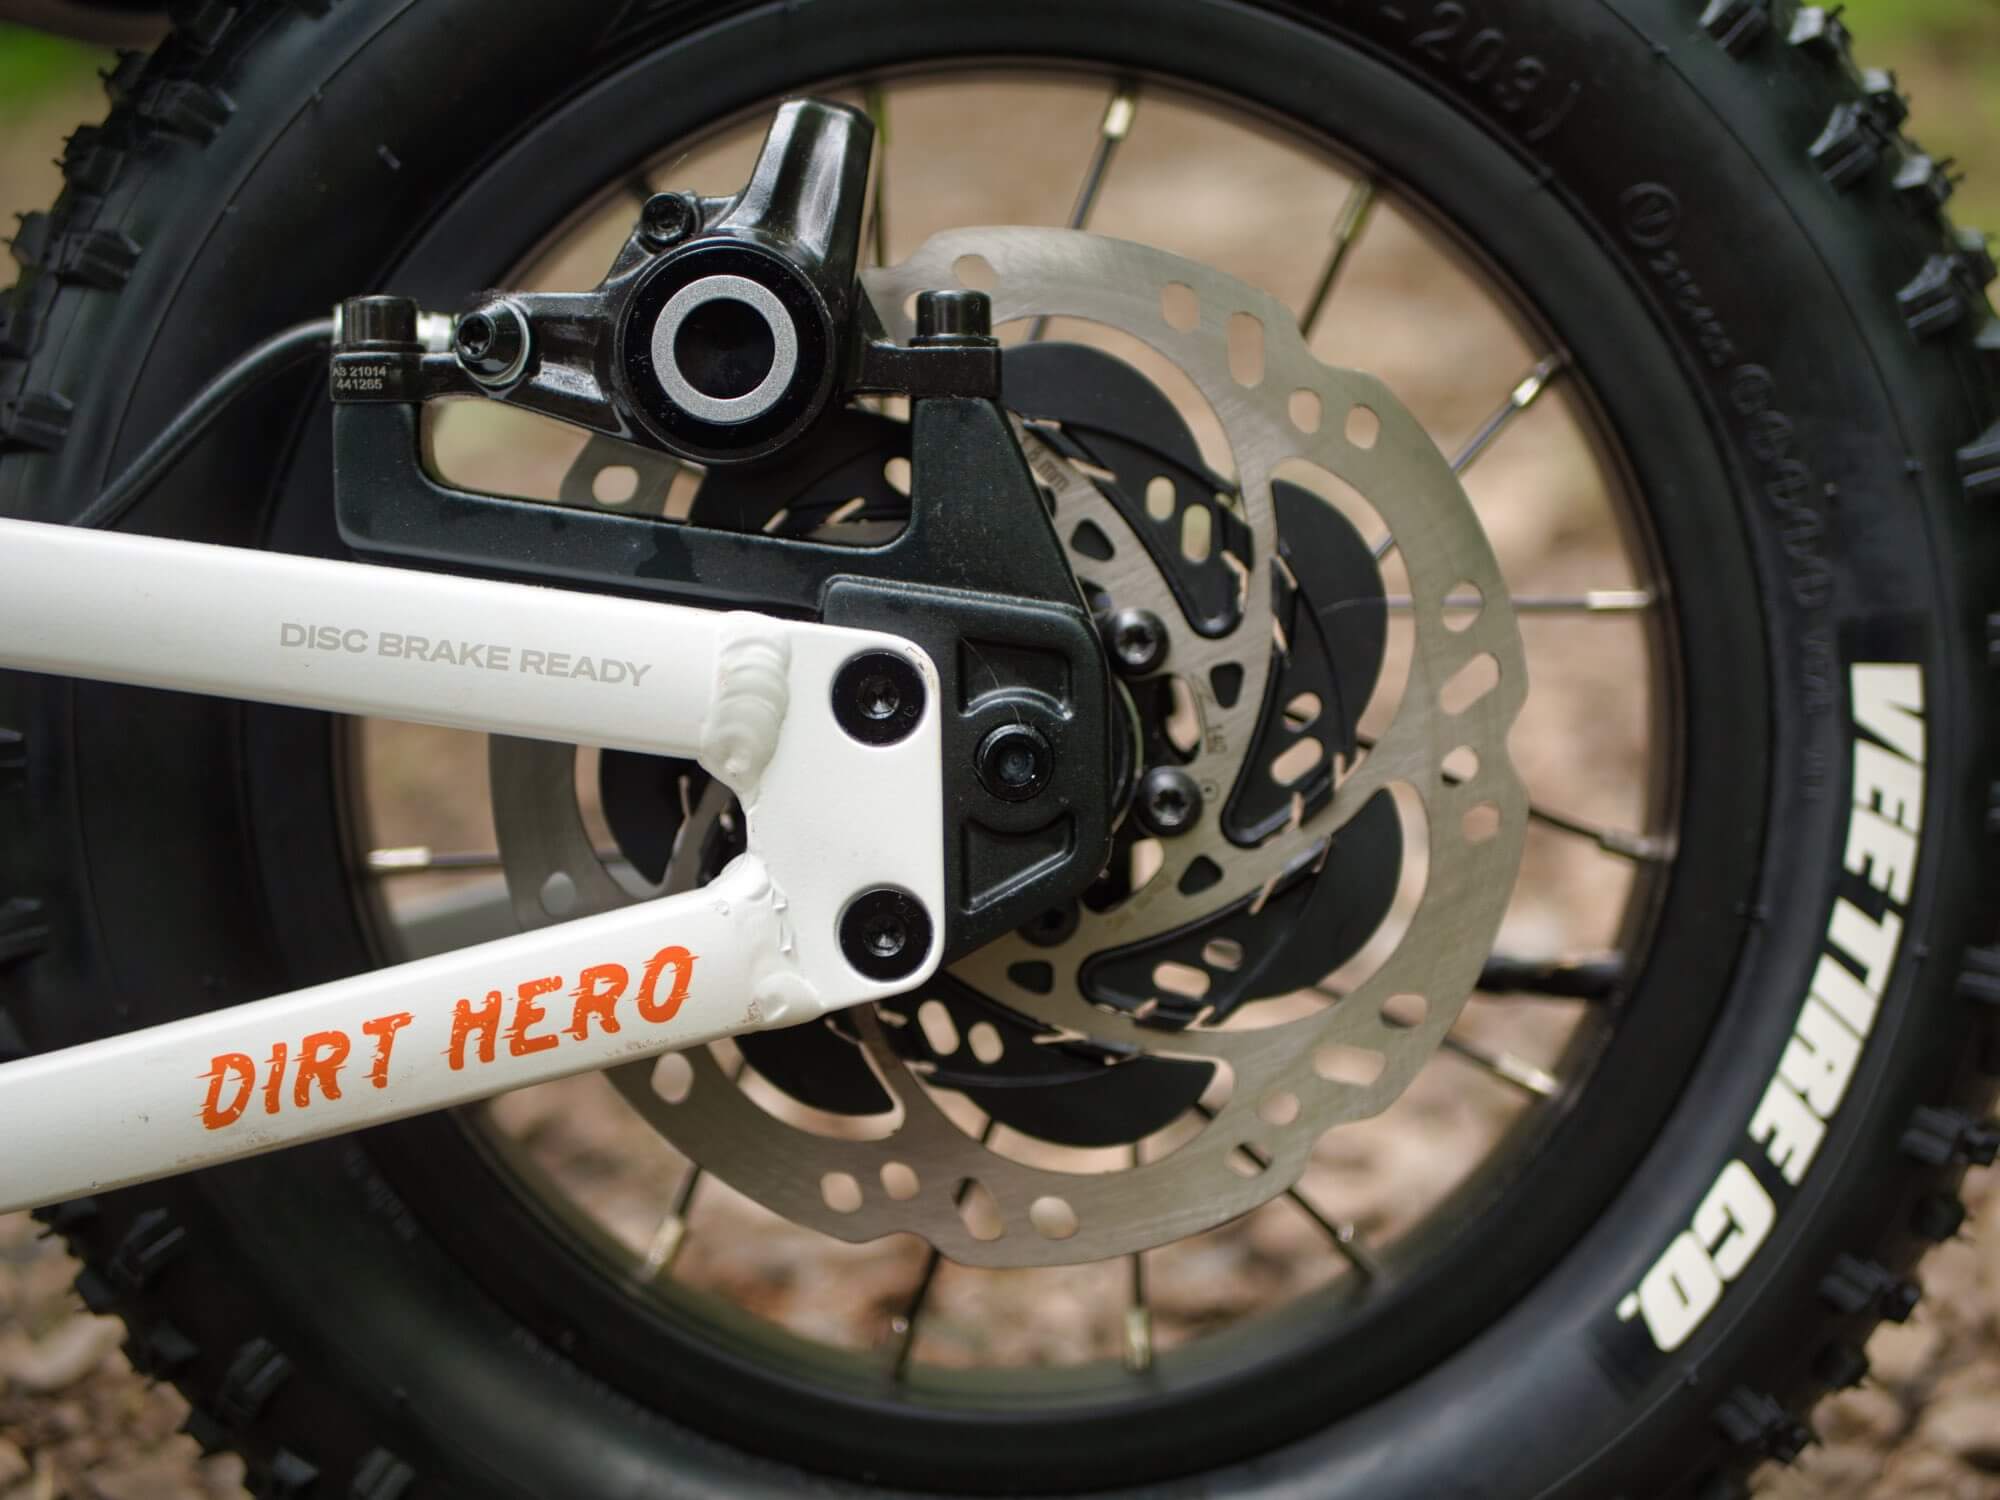 Wheels on the Shotgun DIRT balance bike - first impressions review